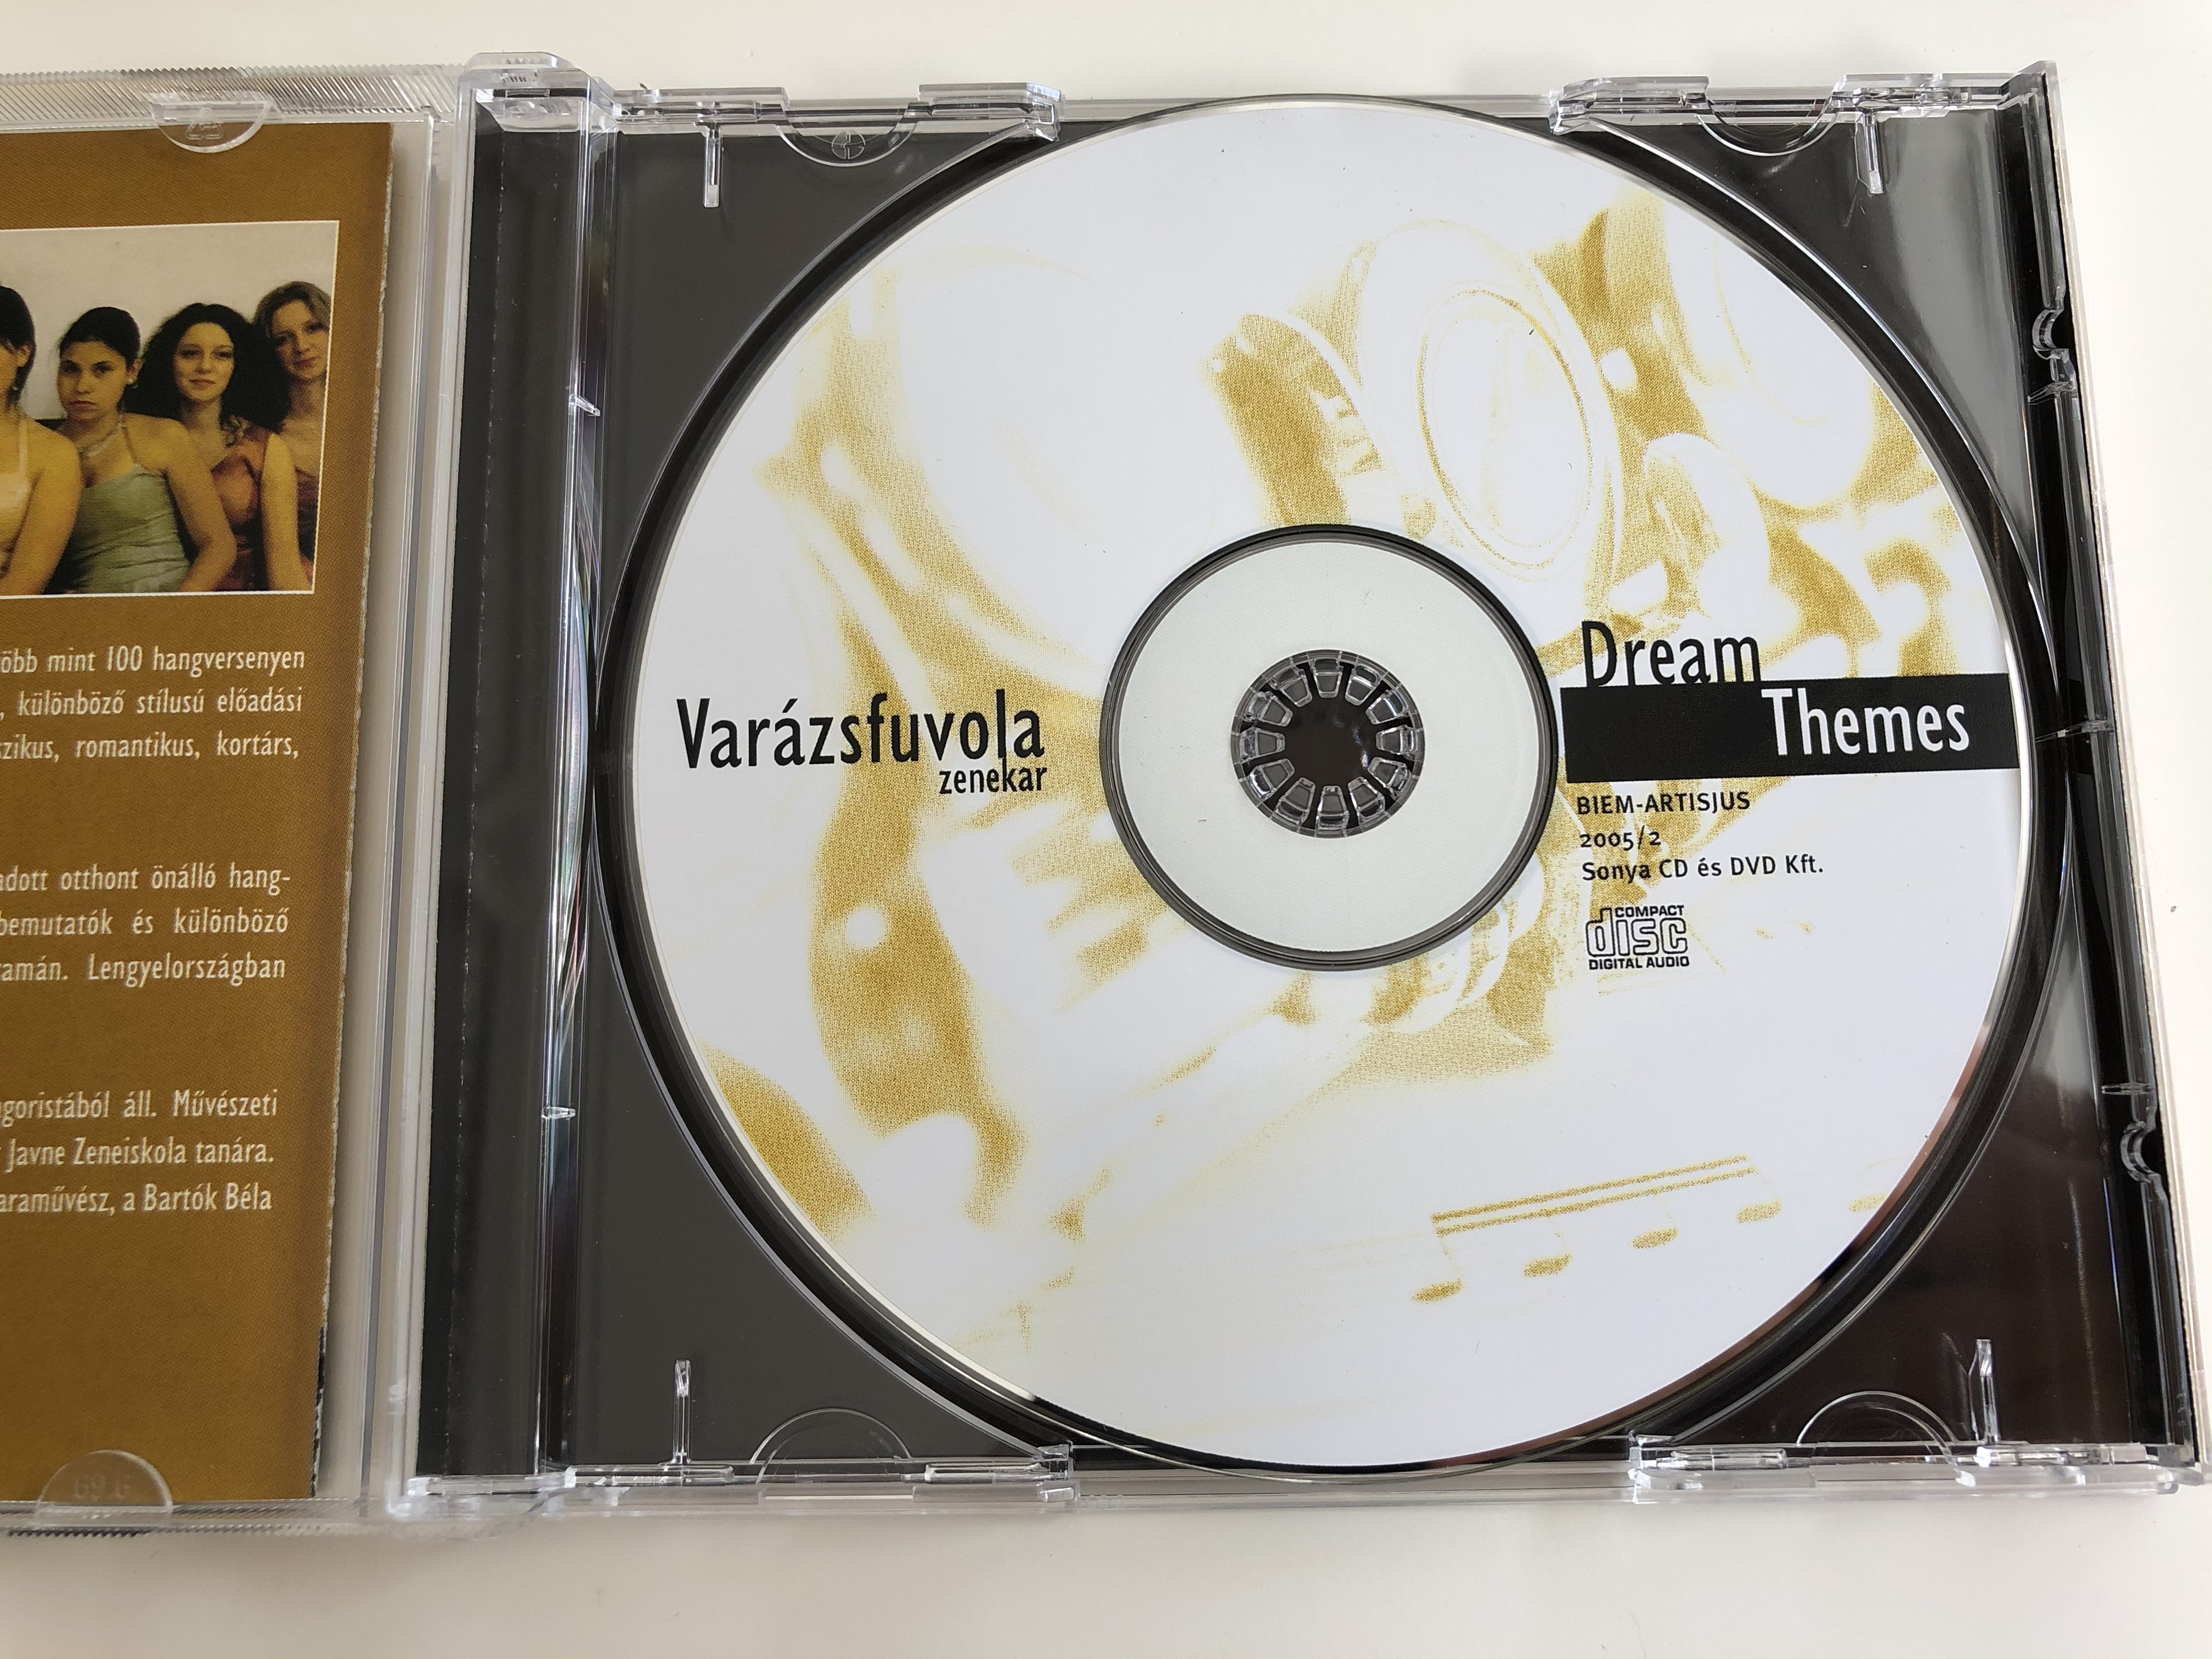 varazsfuvola-zenekar-dream-themes-sonya-cd-audio-cd-20052-5-.jpg